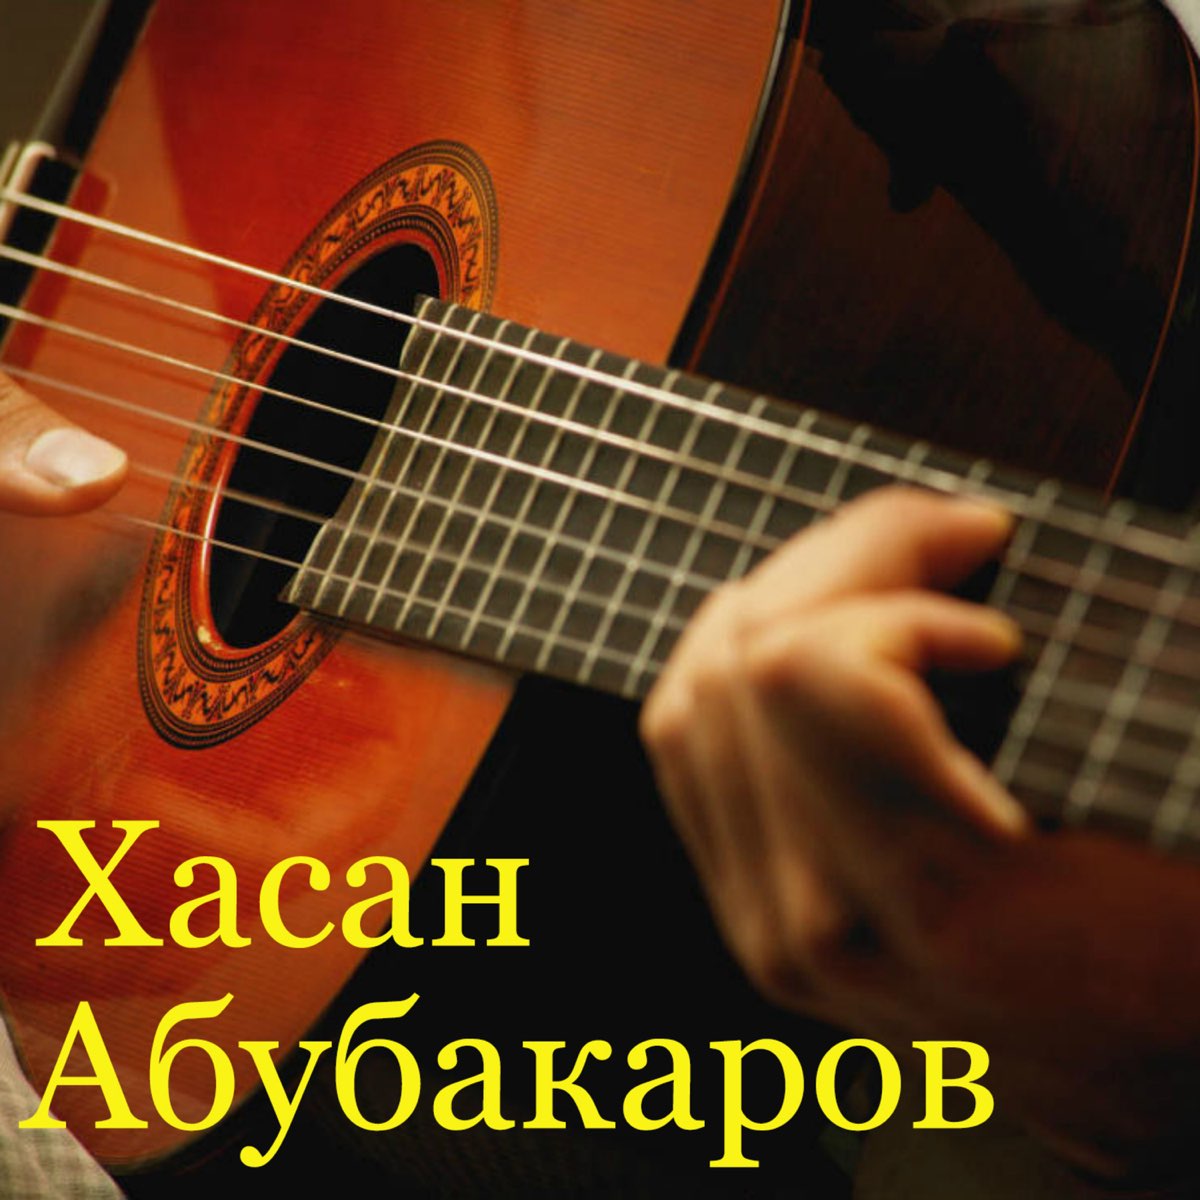 А твои глаза рисуют любовь - Single by Khasan Abubakarov on Apple Music.